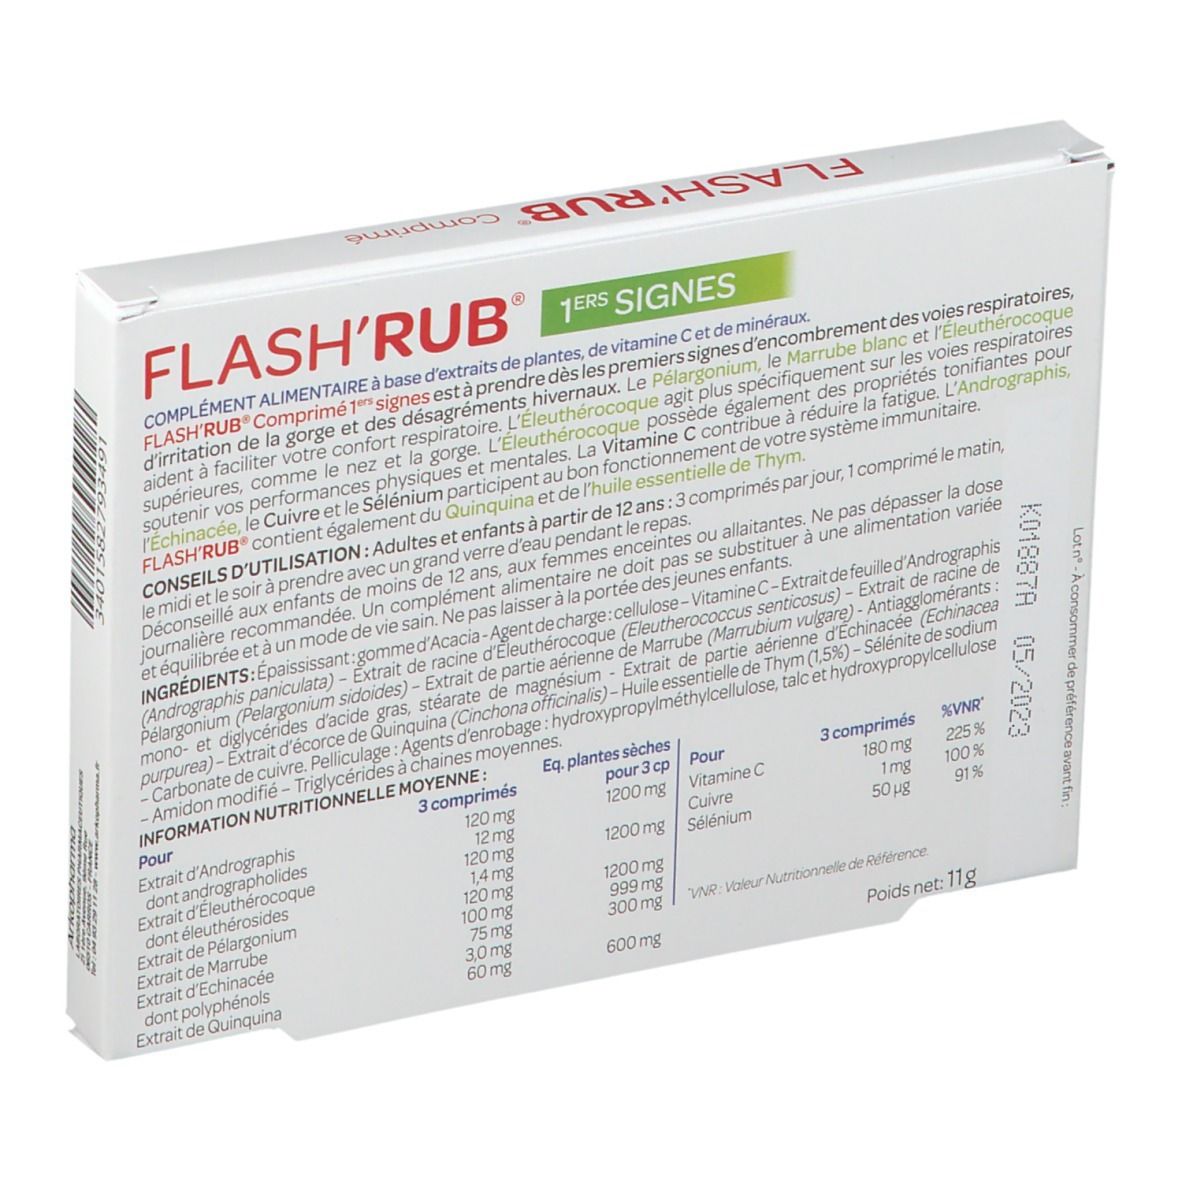 Arkopharma Flash'Rub® Comprimé